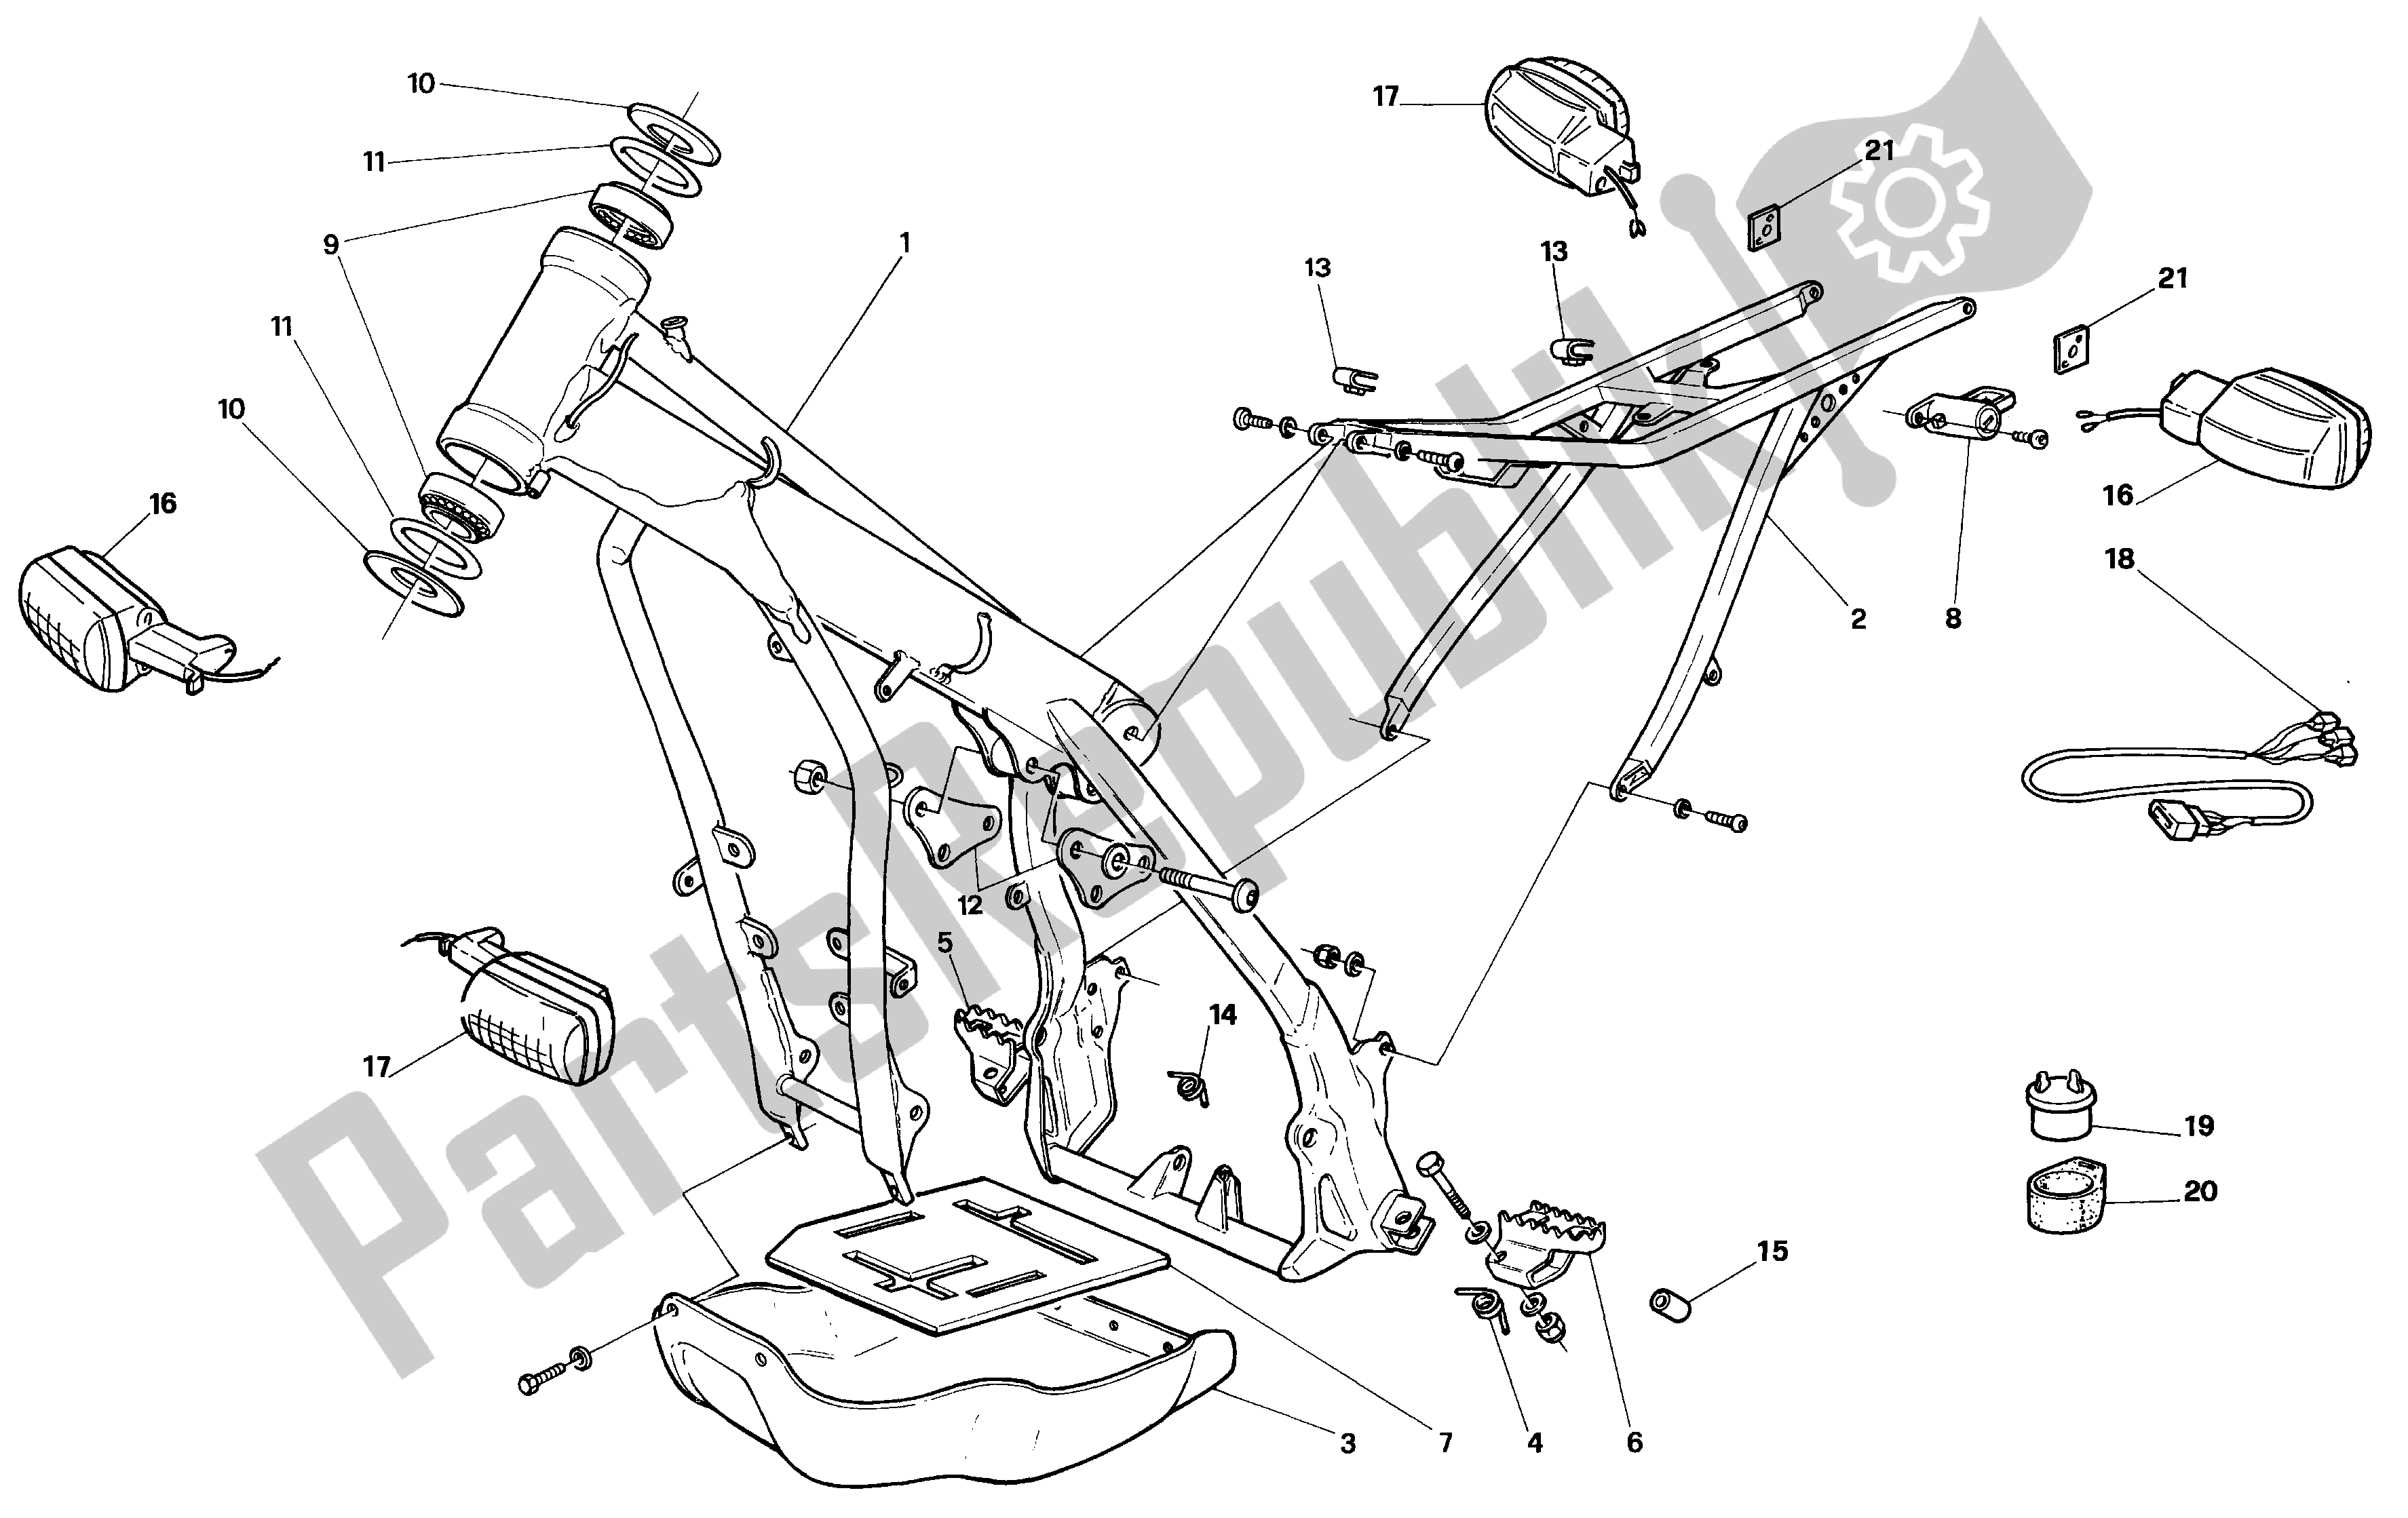 All parts for the Frame of the Aprilia Climber 240 1993